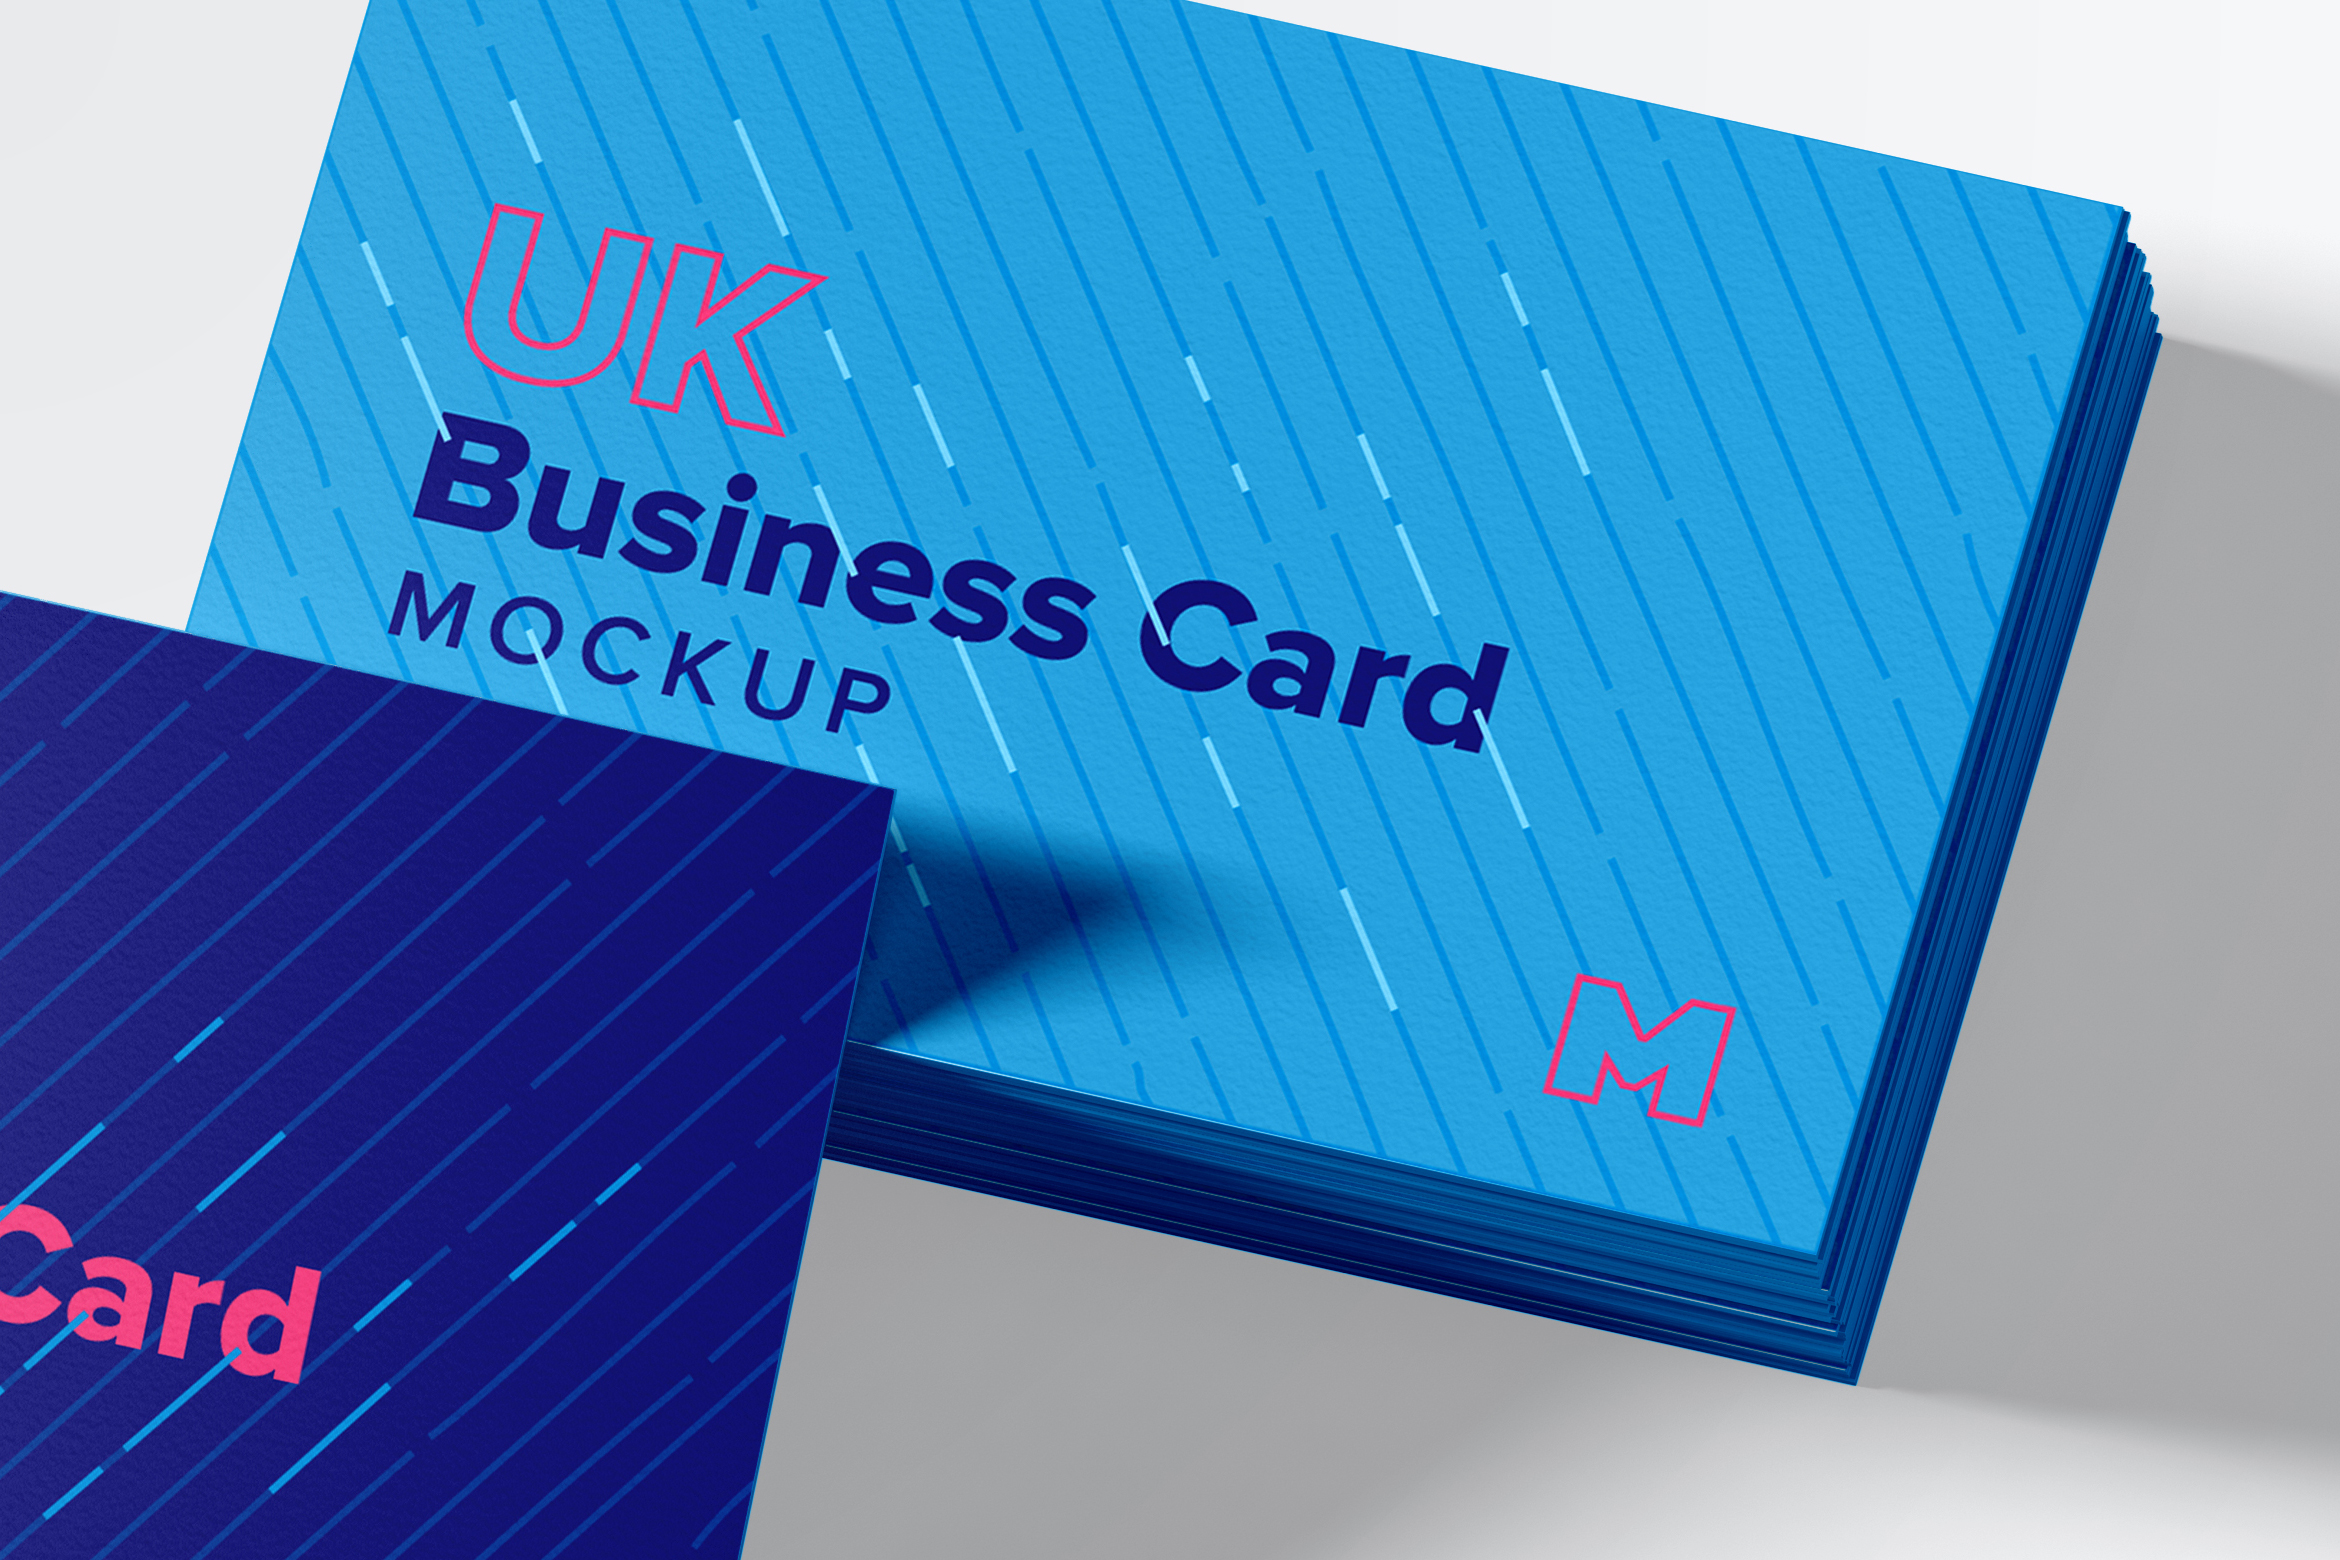 UK标准规格企业名片设计预览图样机模板06 UK Business Cards Mockup 06插图(1)